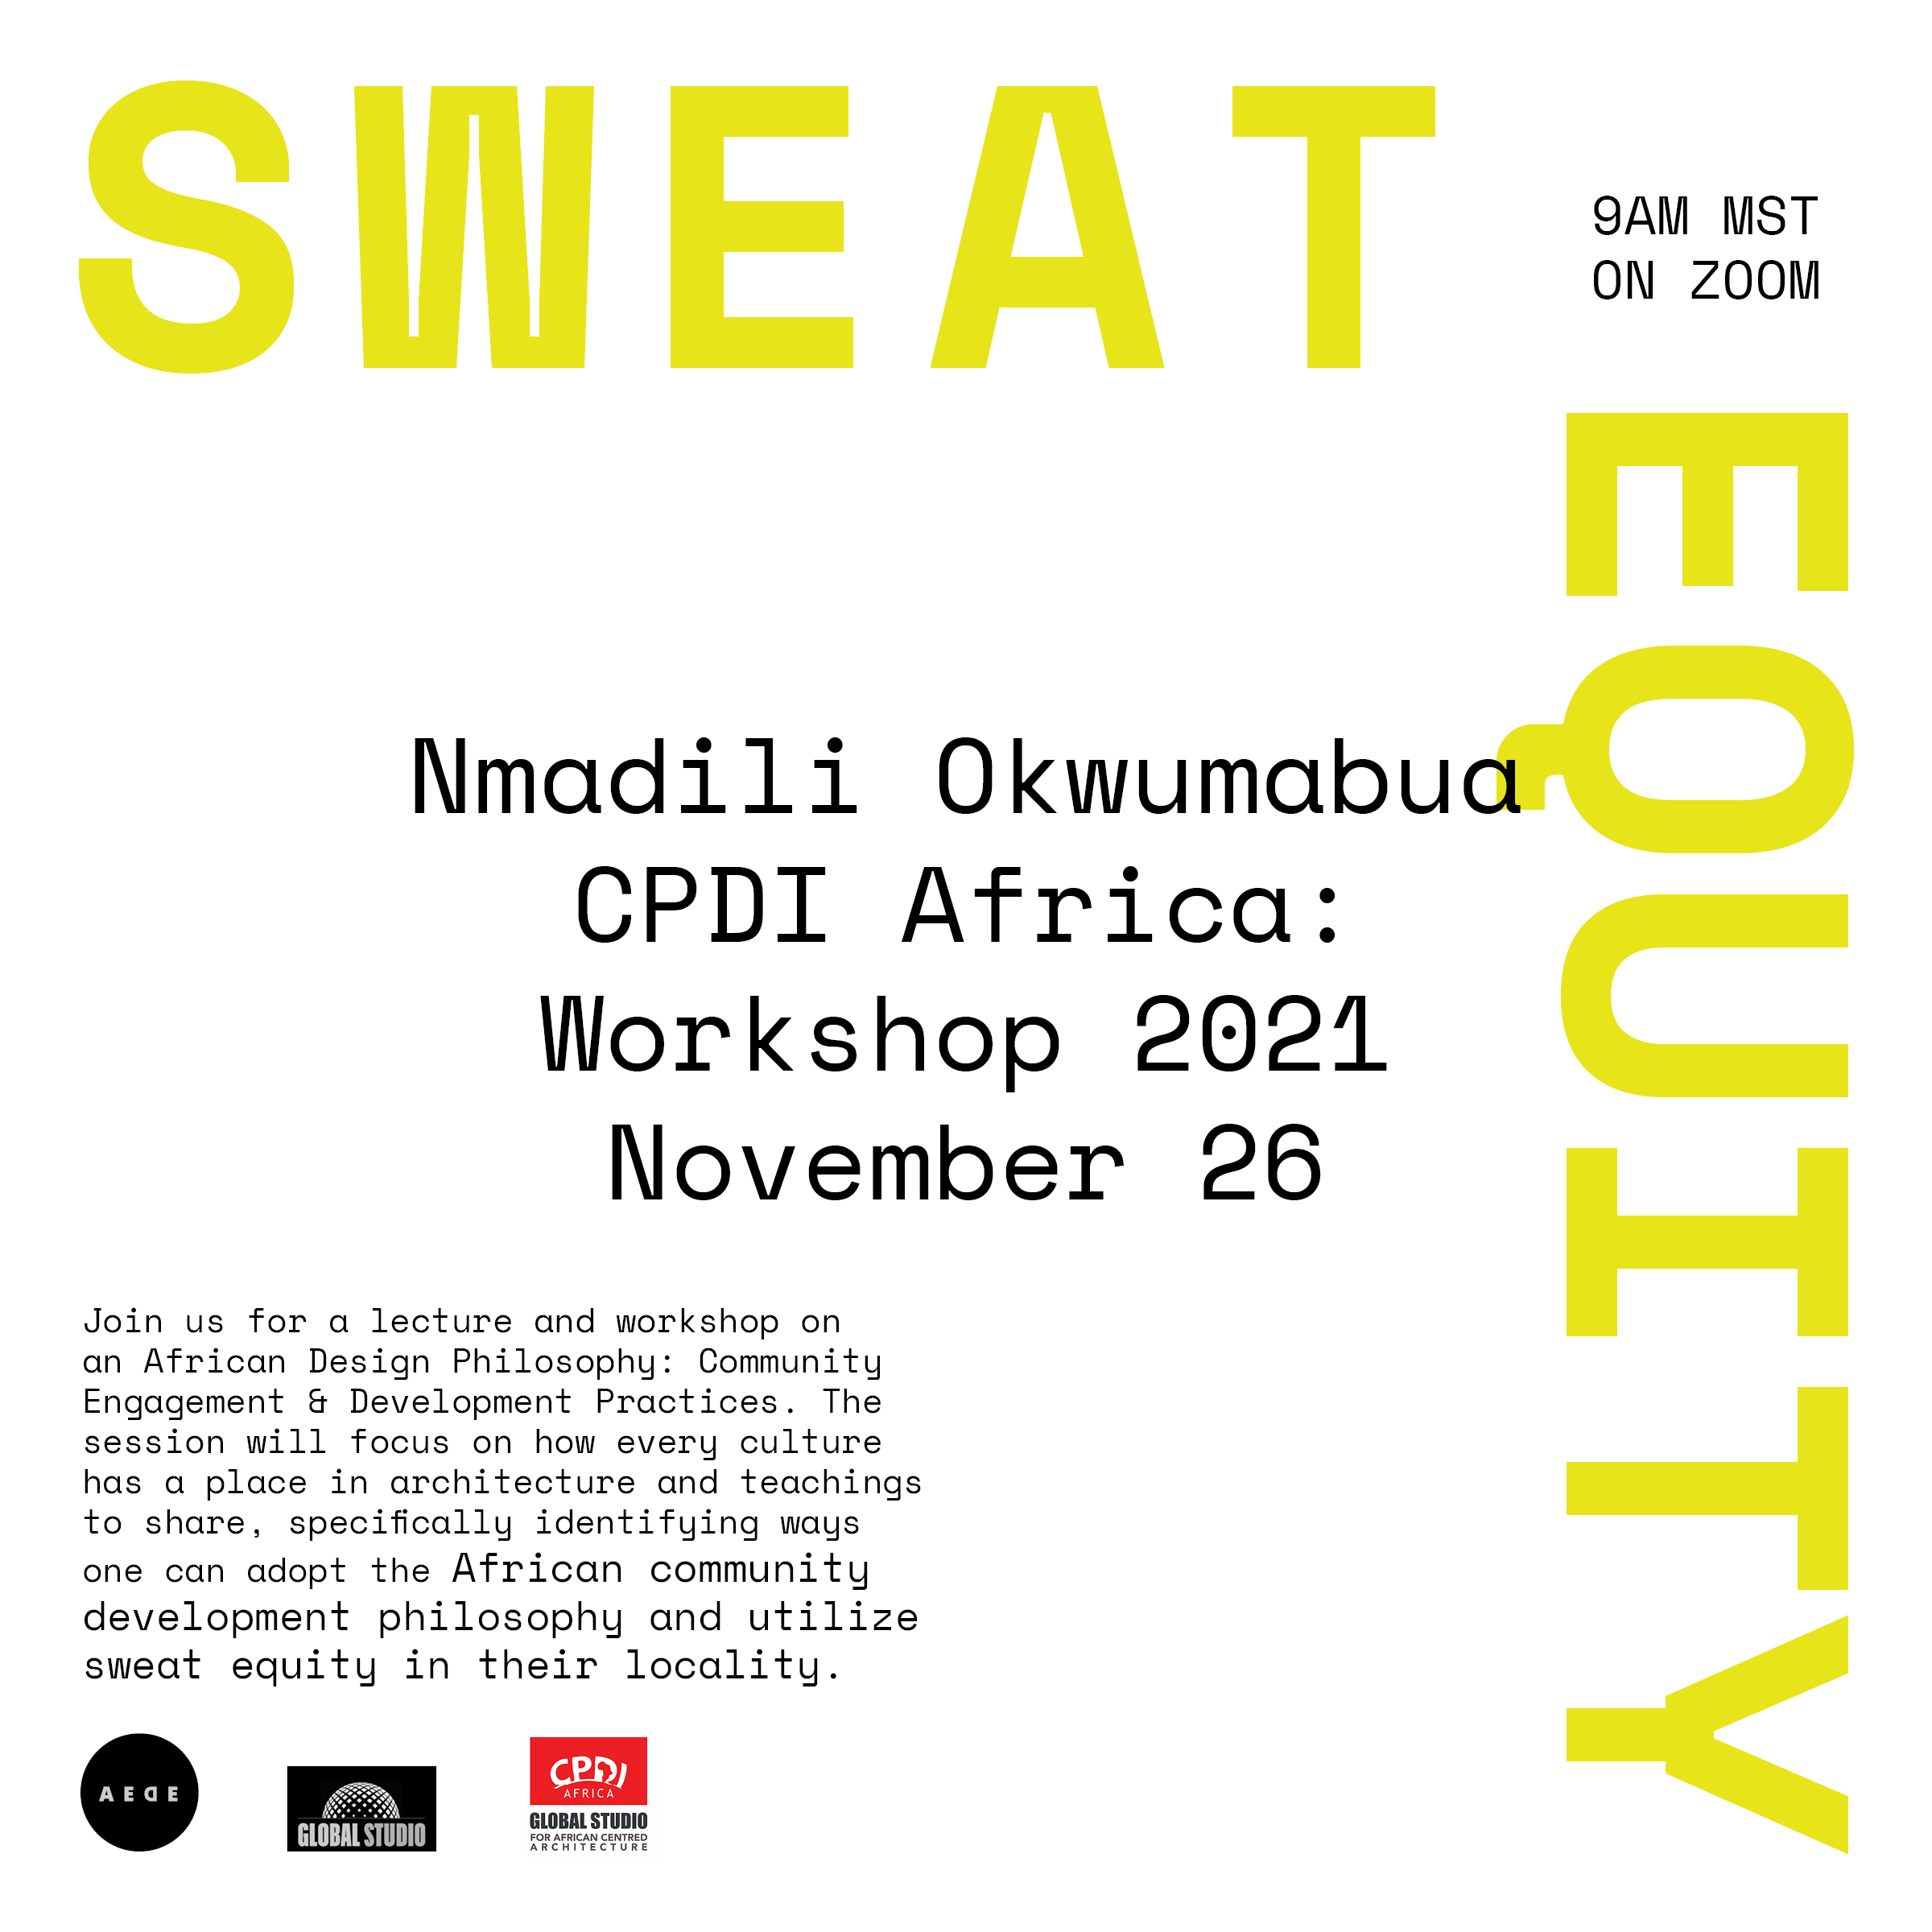 Nmadili Okwumabua CPID Africa Workshop poster